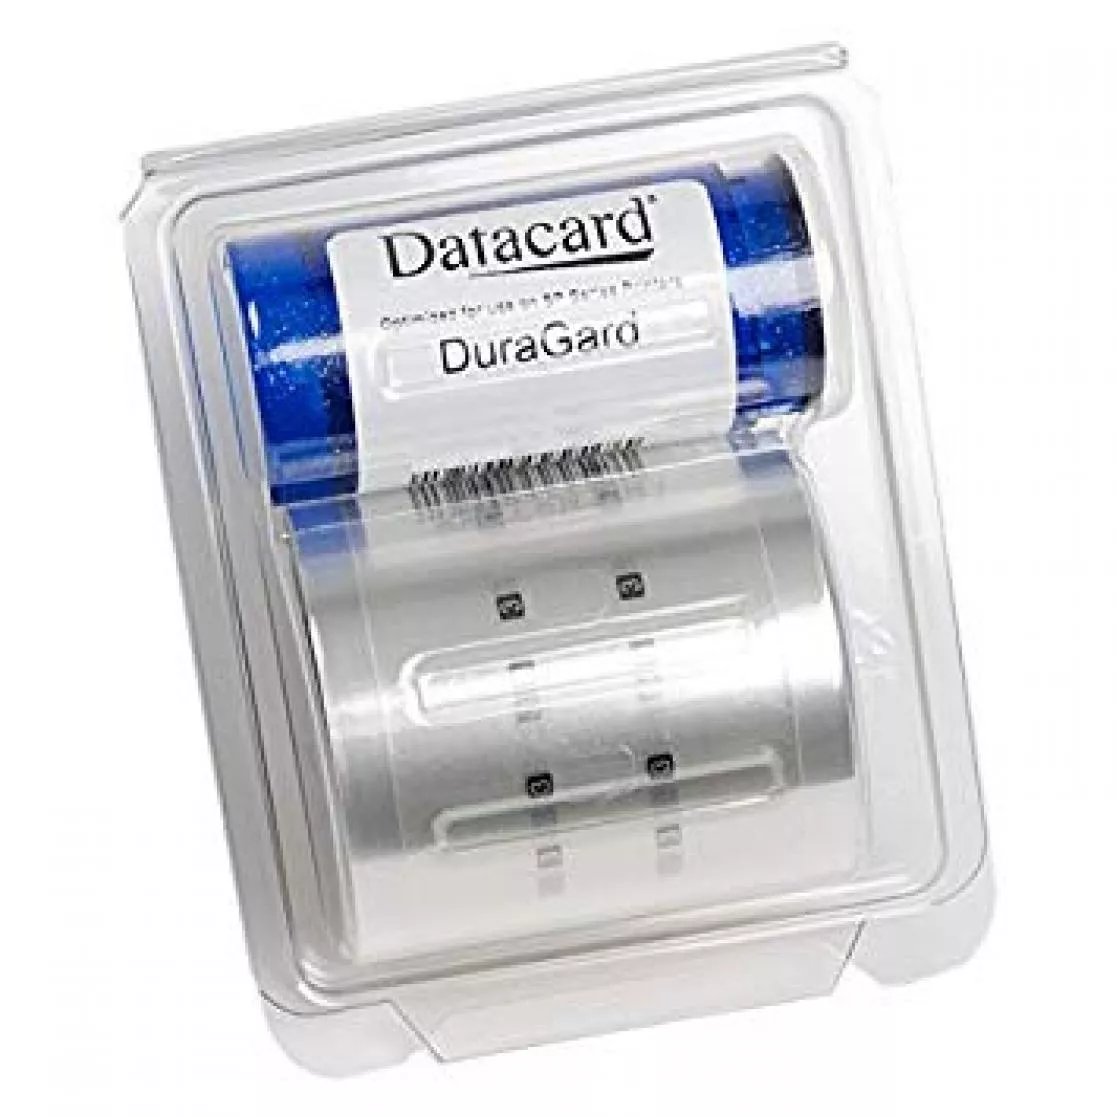 Laminate DuraGard magnetic strip for card printer datacard SD460